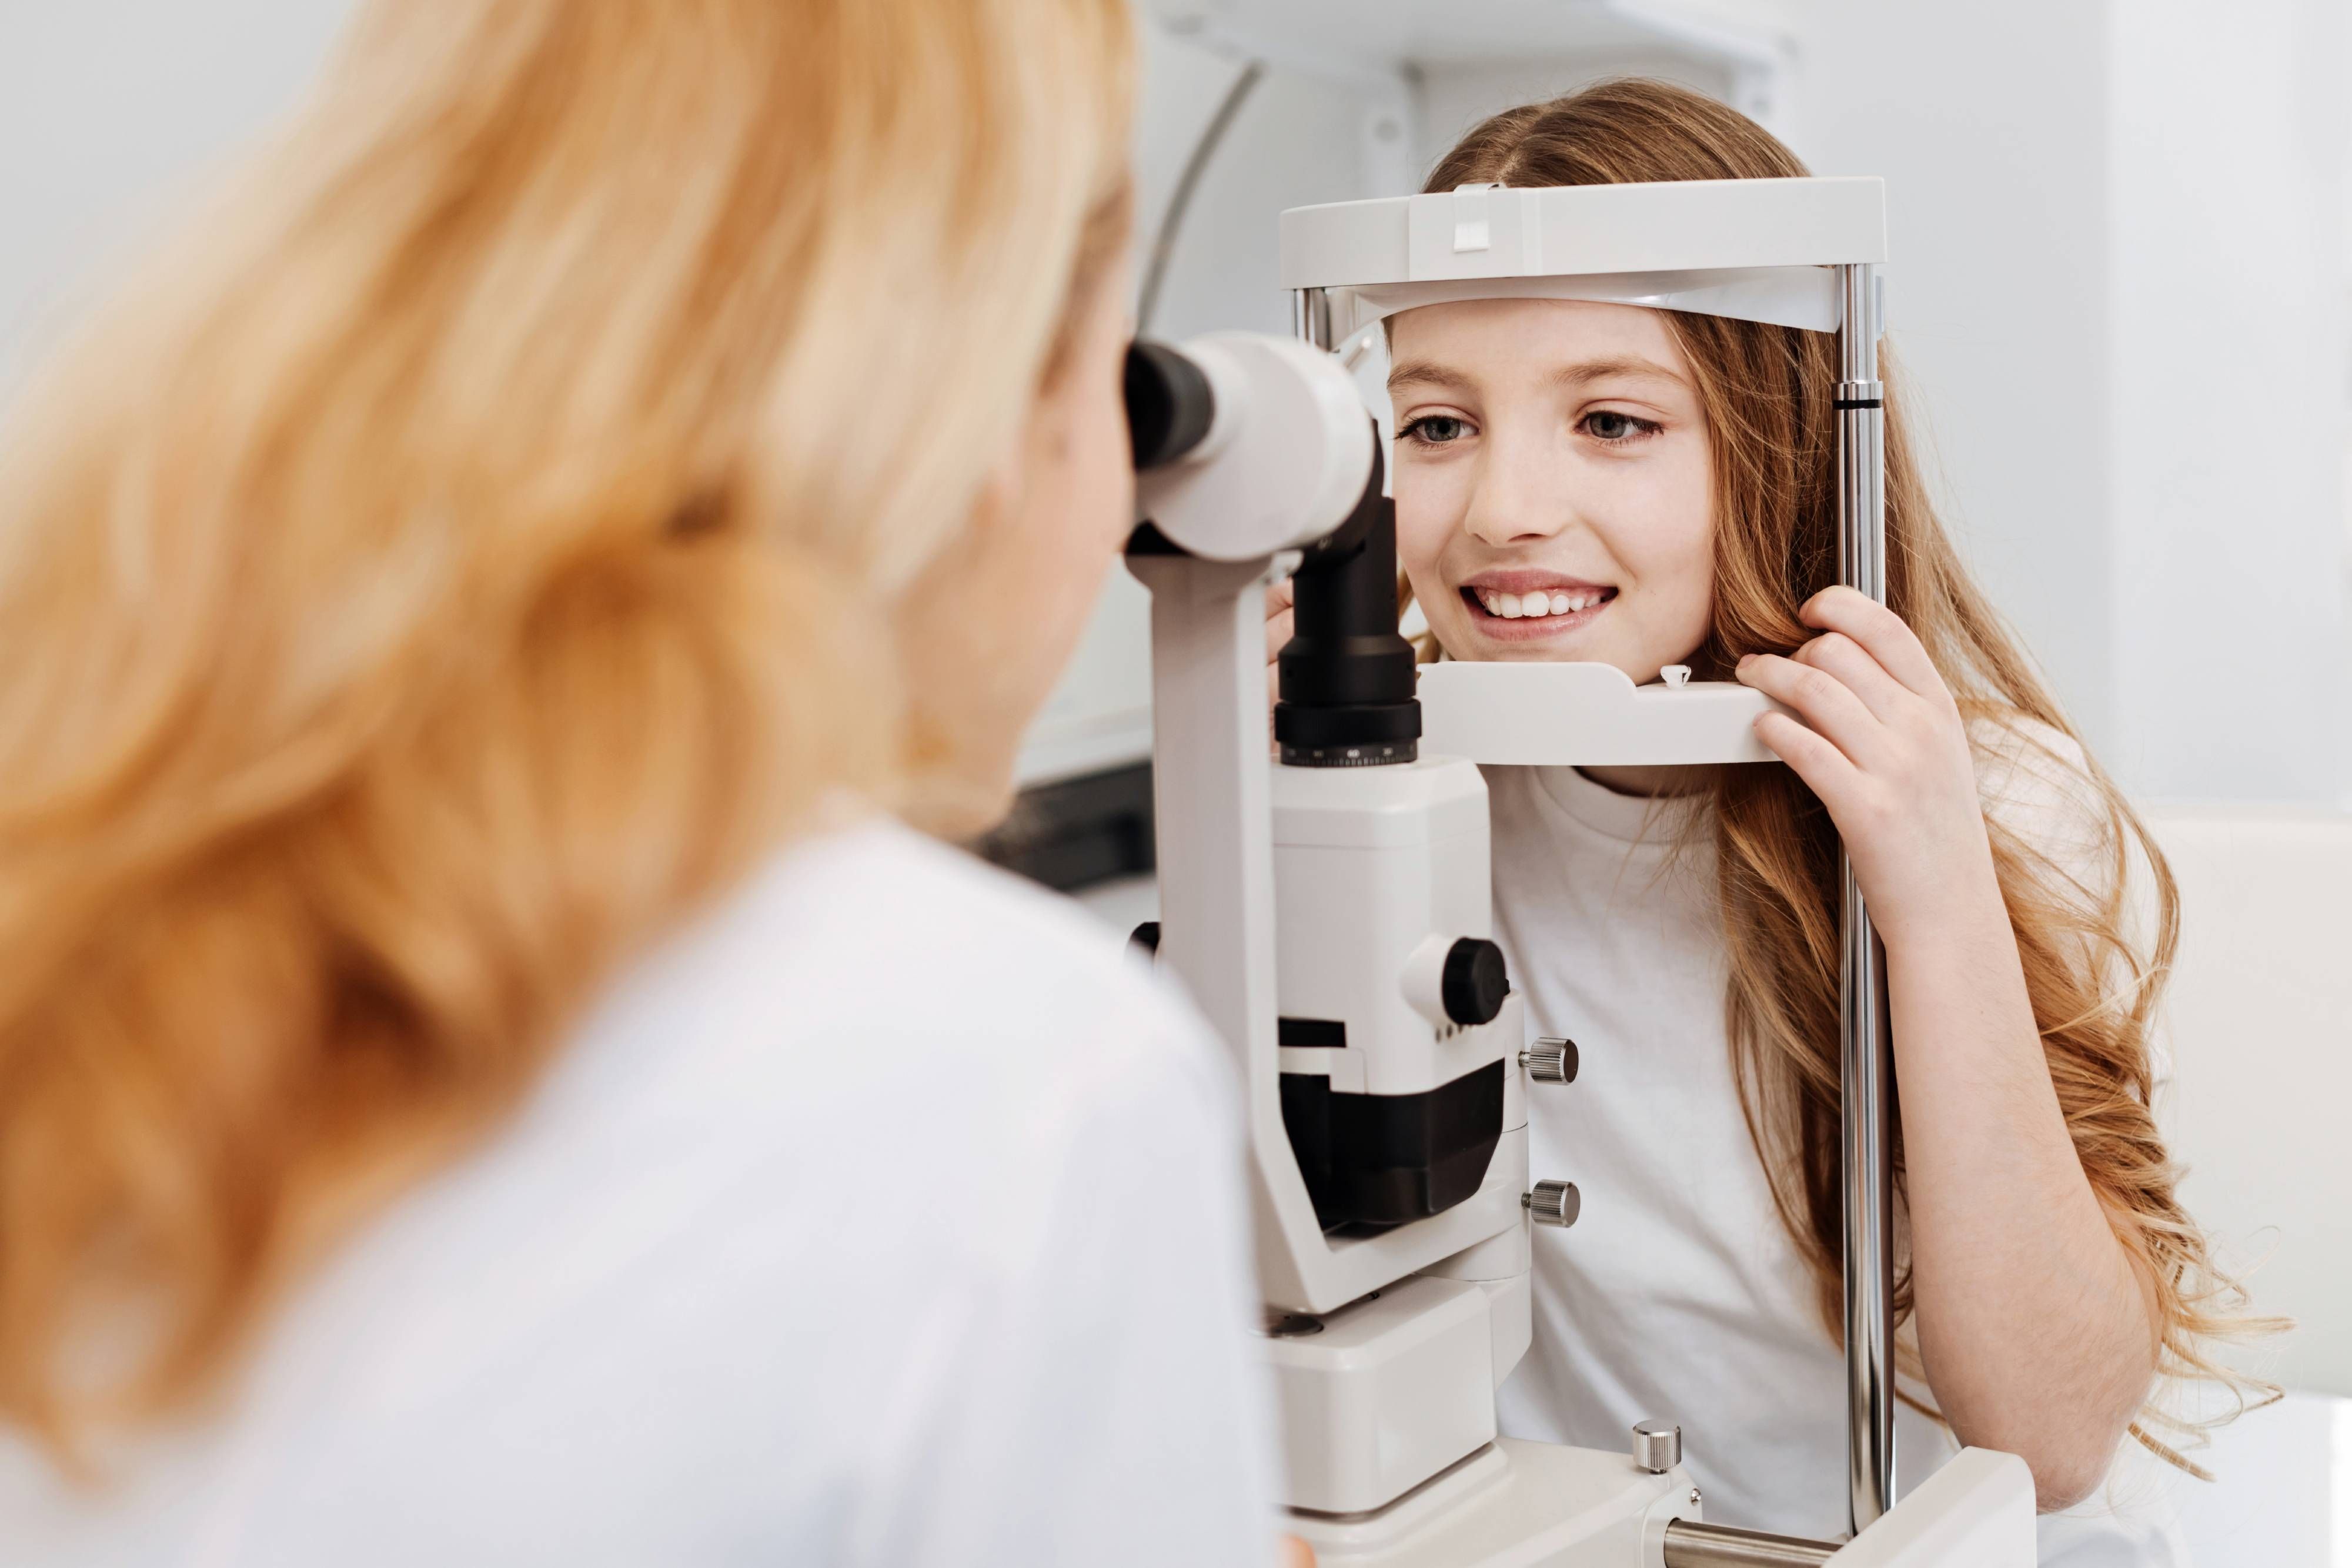 Pediatric Eye Exams vs. School Vision Screenings